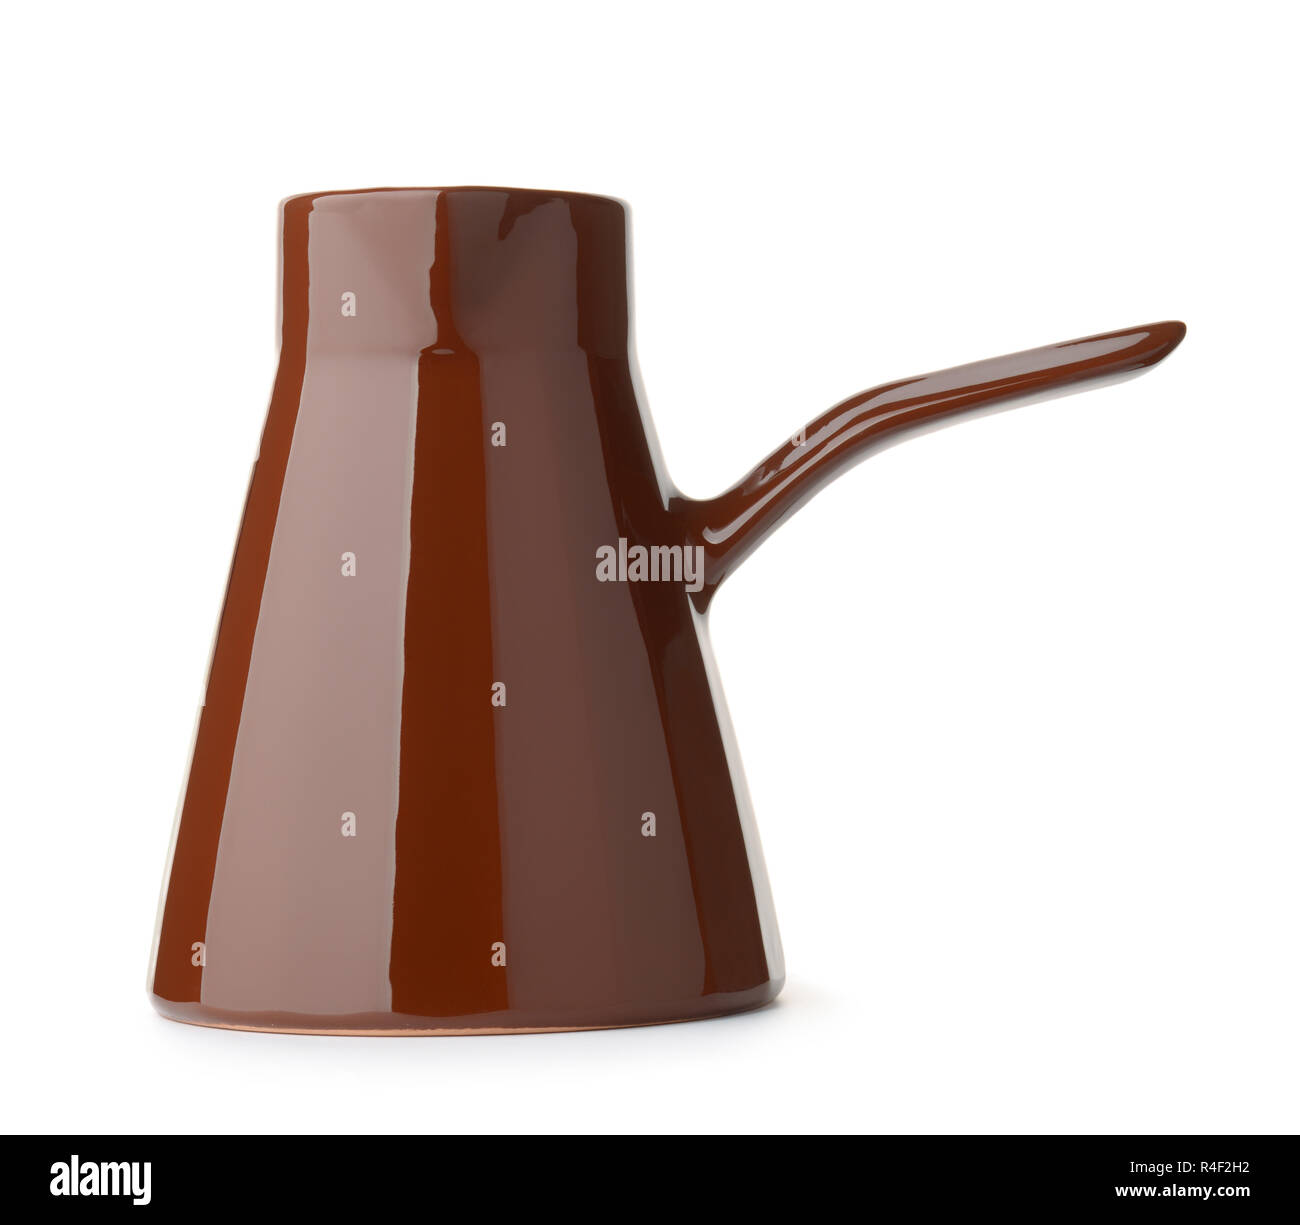 Ceramic cezve coffe pot isolated on white Stock Photo